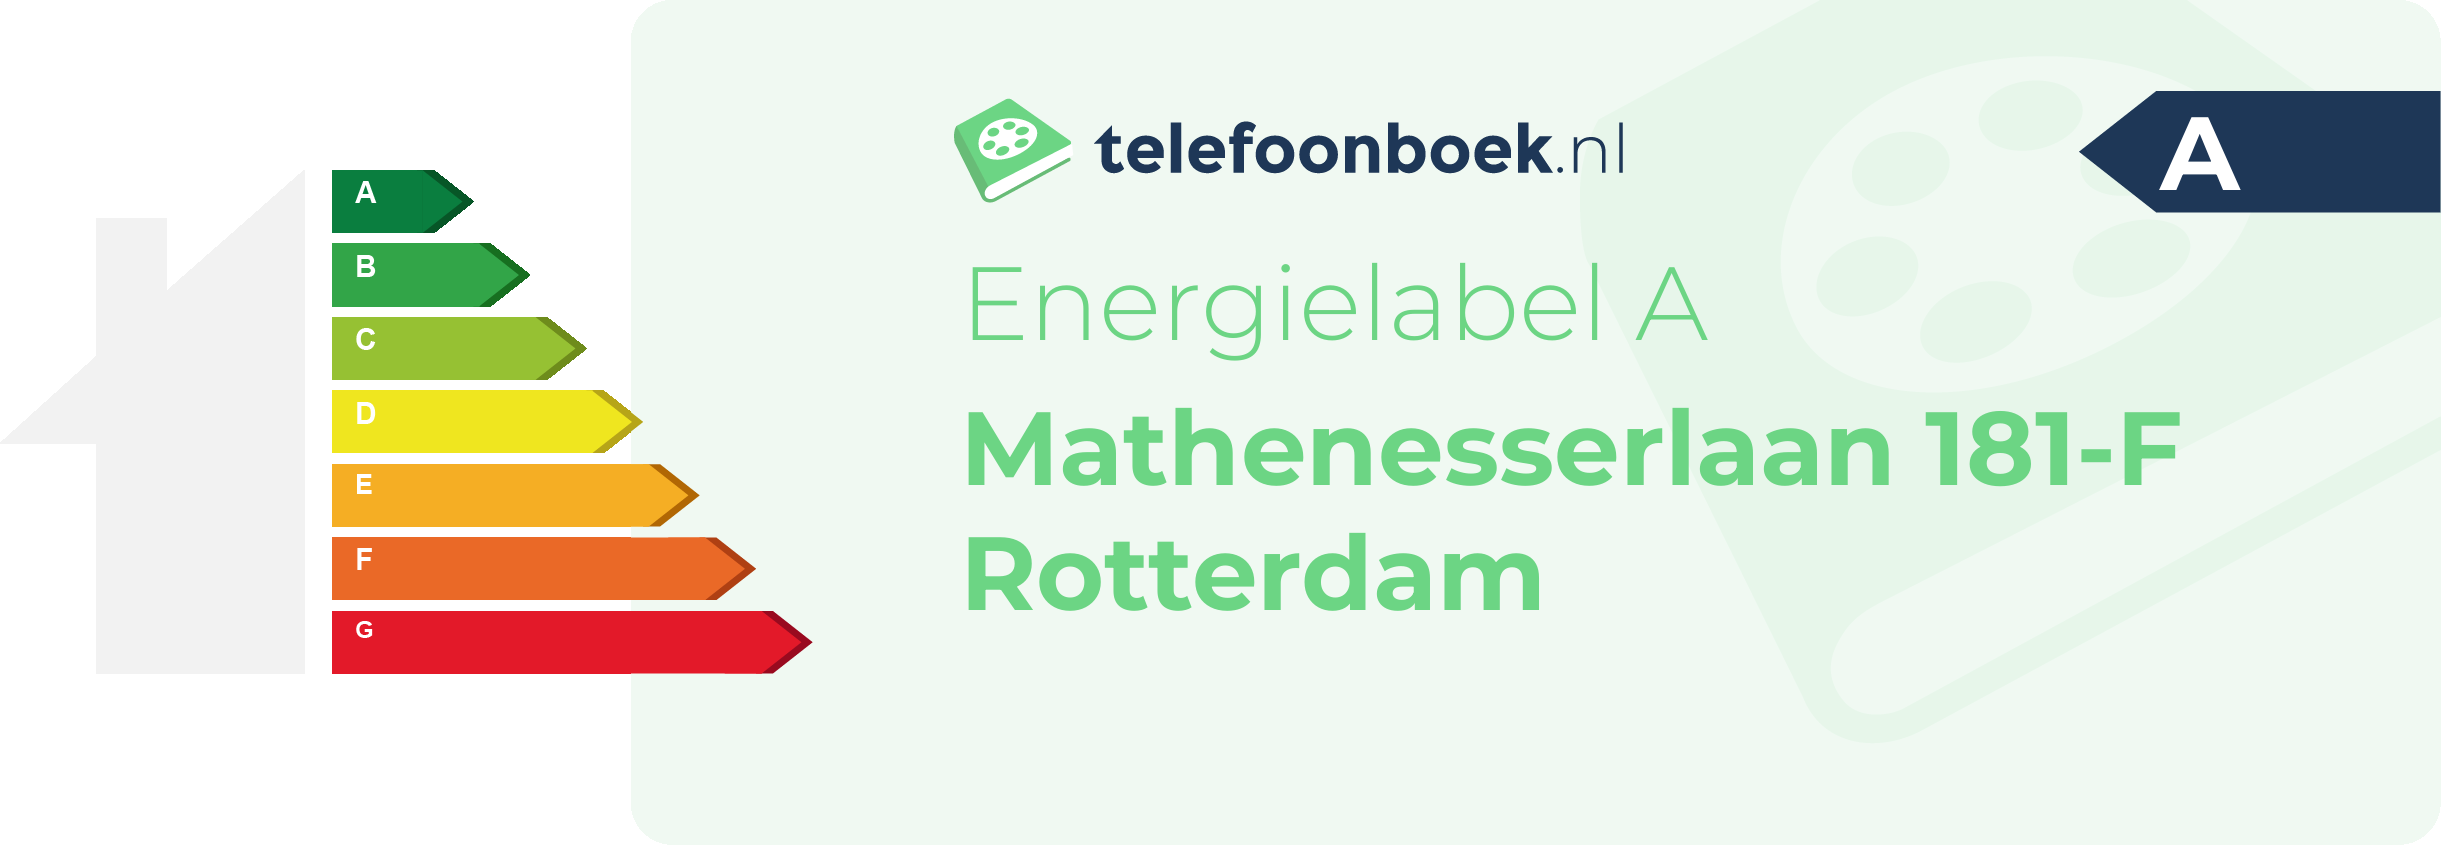 Energielabel Mathenesserlaan 181-F Rotterdam